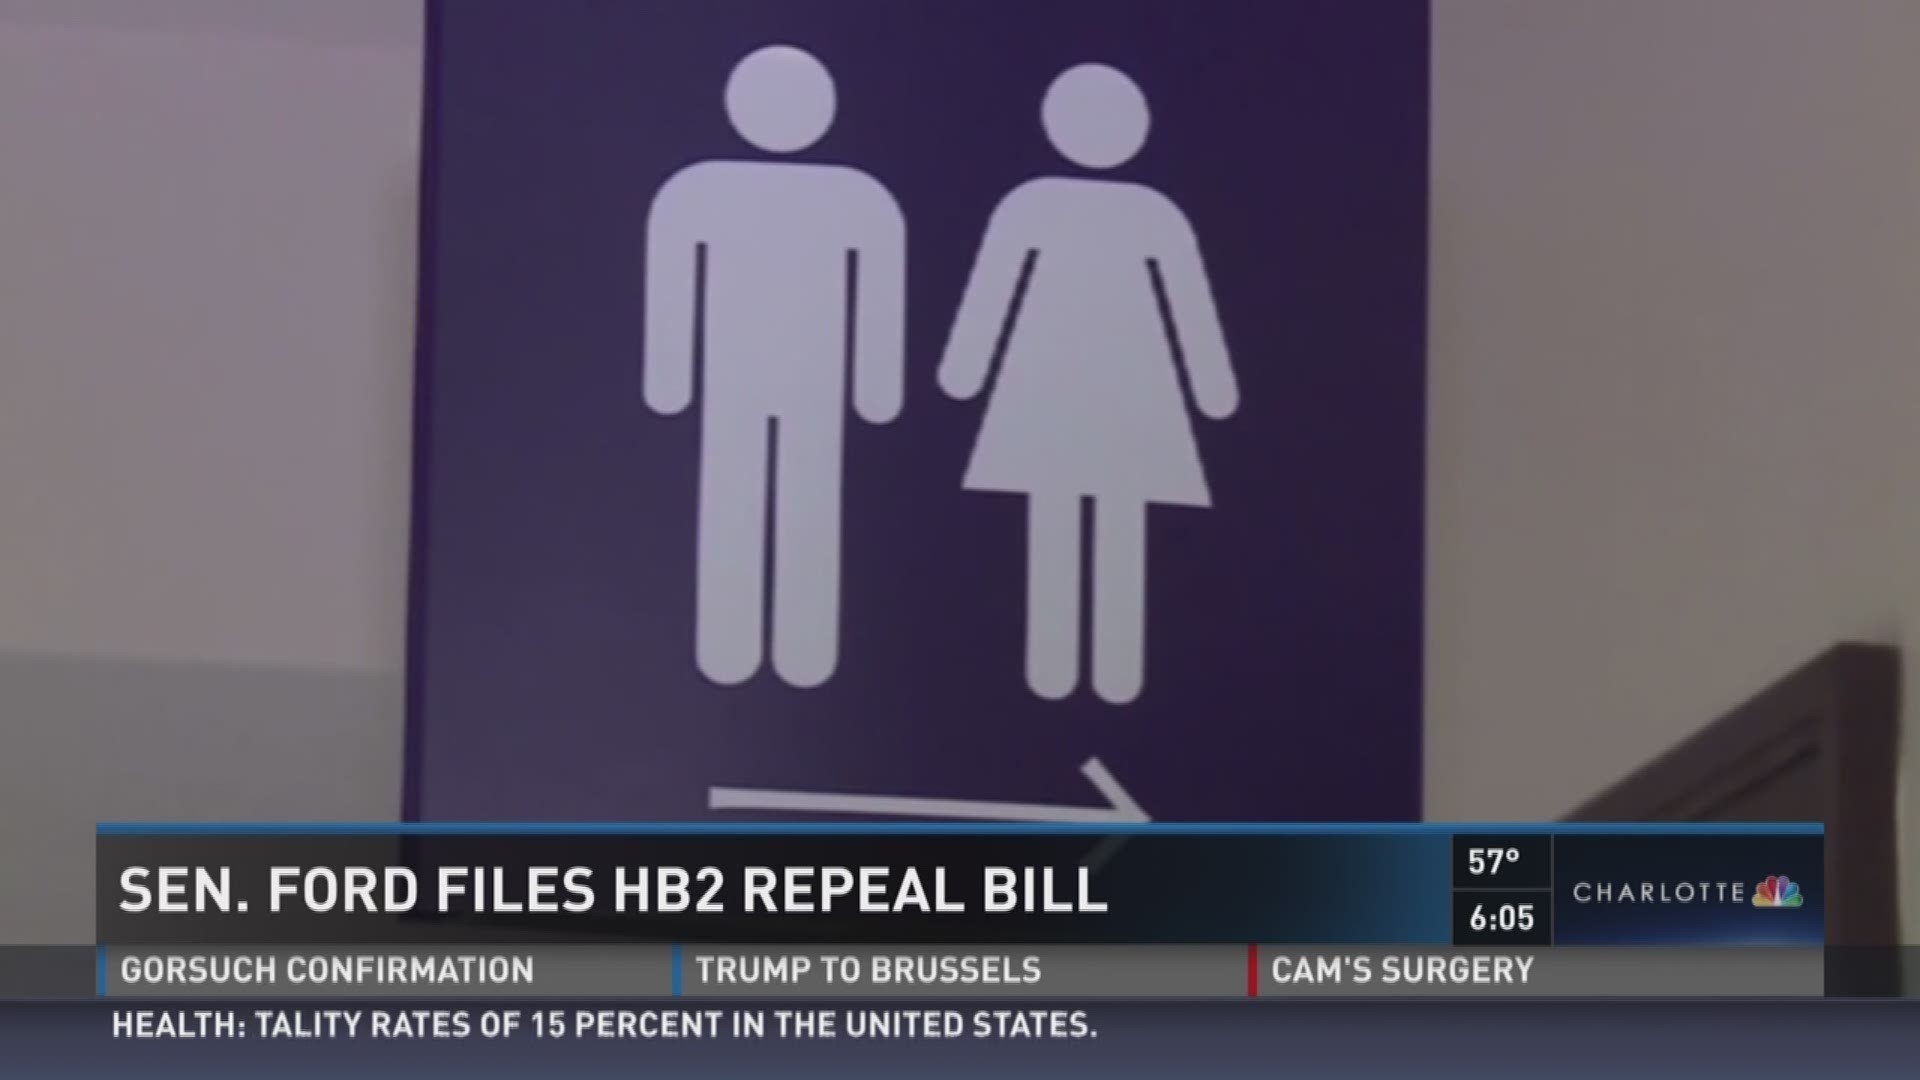 Mecklenburg County-based senator Joel Ford has filed a bill in the North Carolina General Assembly aimed at repealing House Bill 2.